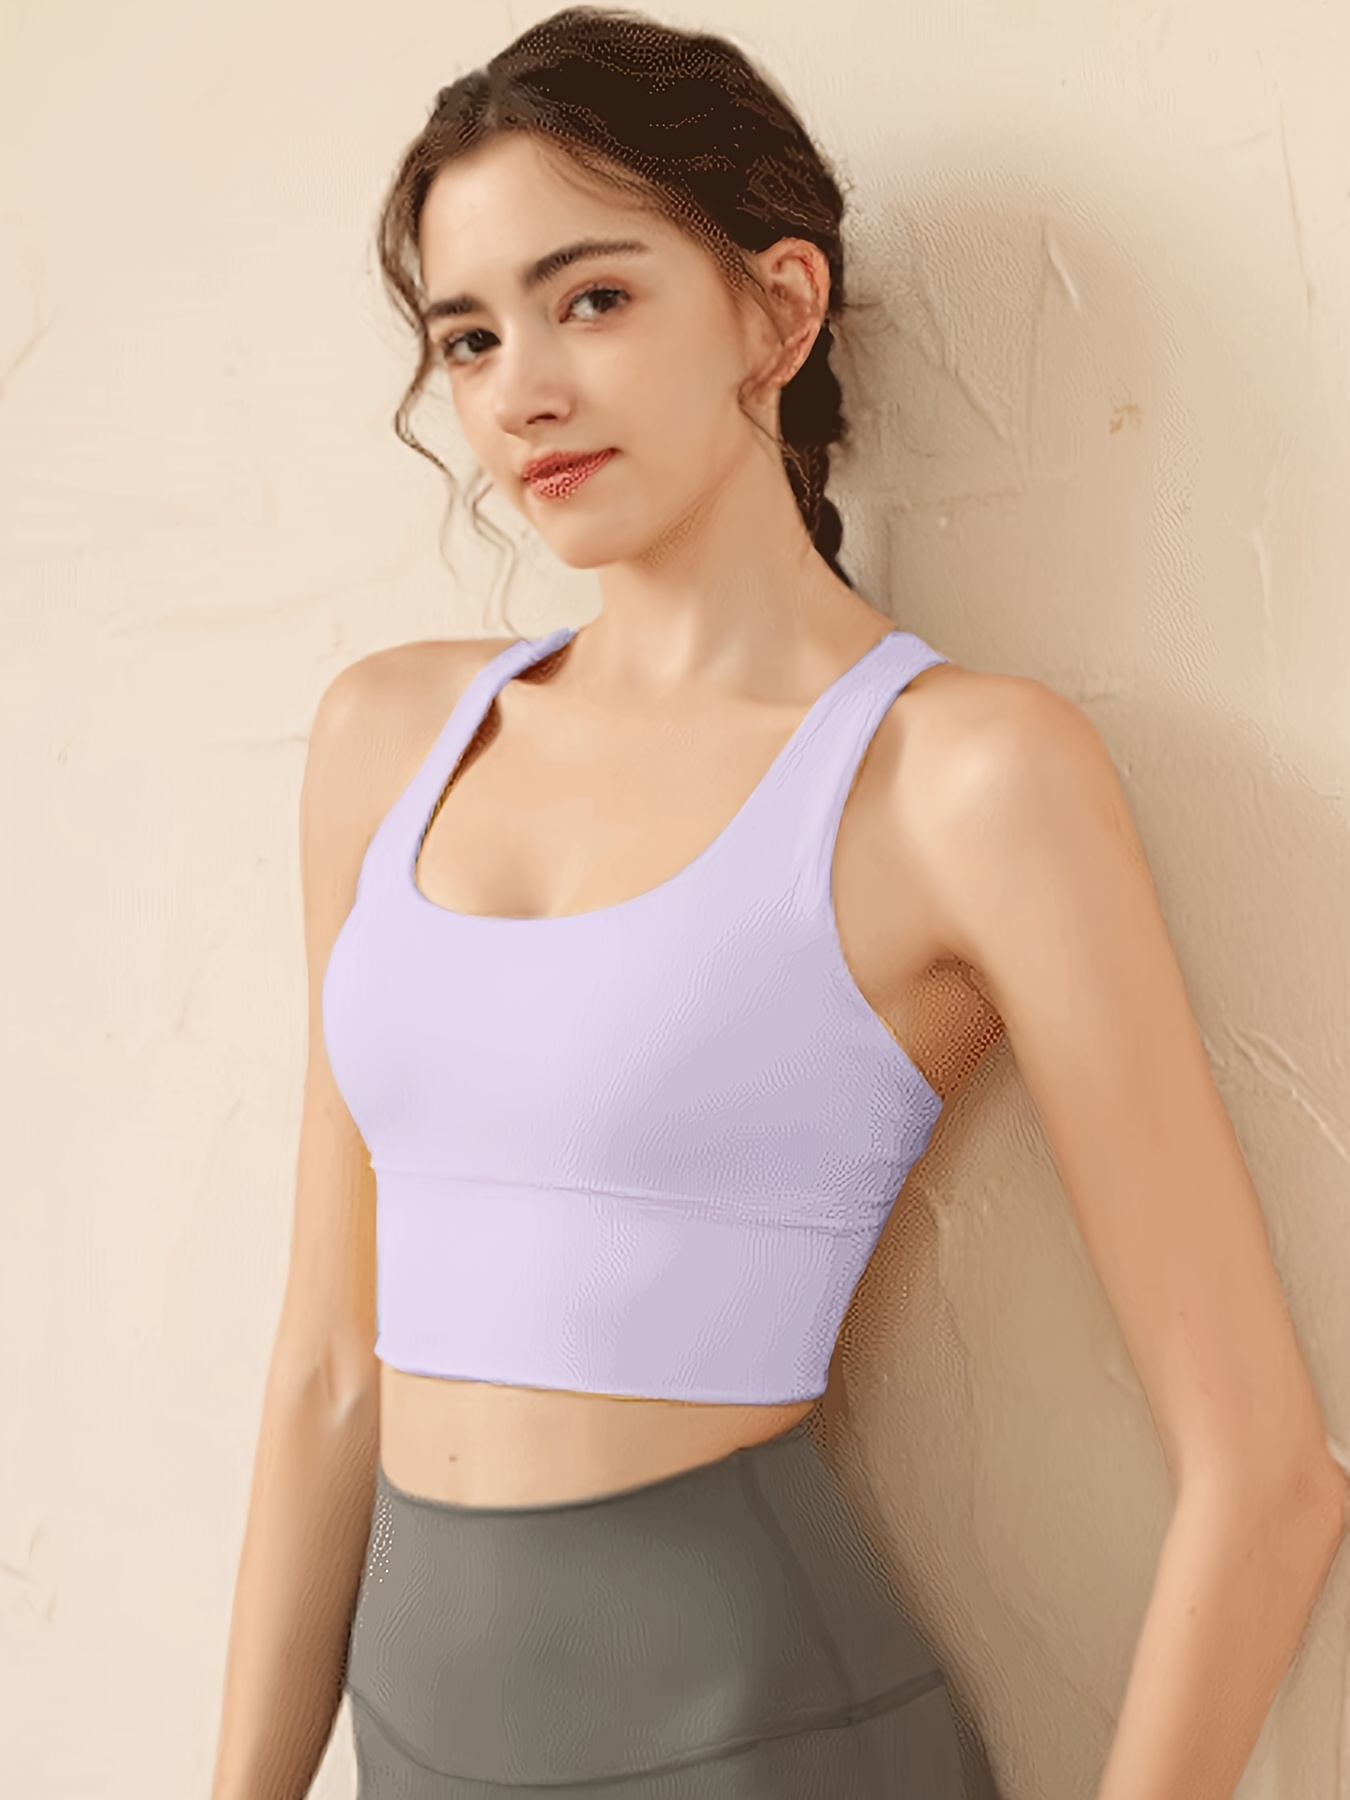 4PCS Girls' Training Bra Padded Sports Bra Camisole Bra Cotton Tank Top  Training Bras Breathable Cami Bras Underwear